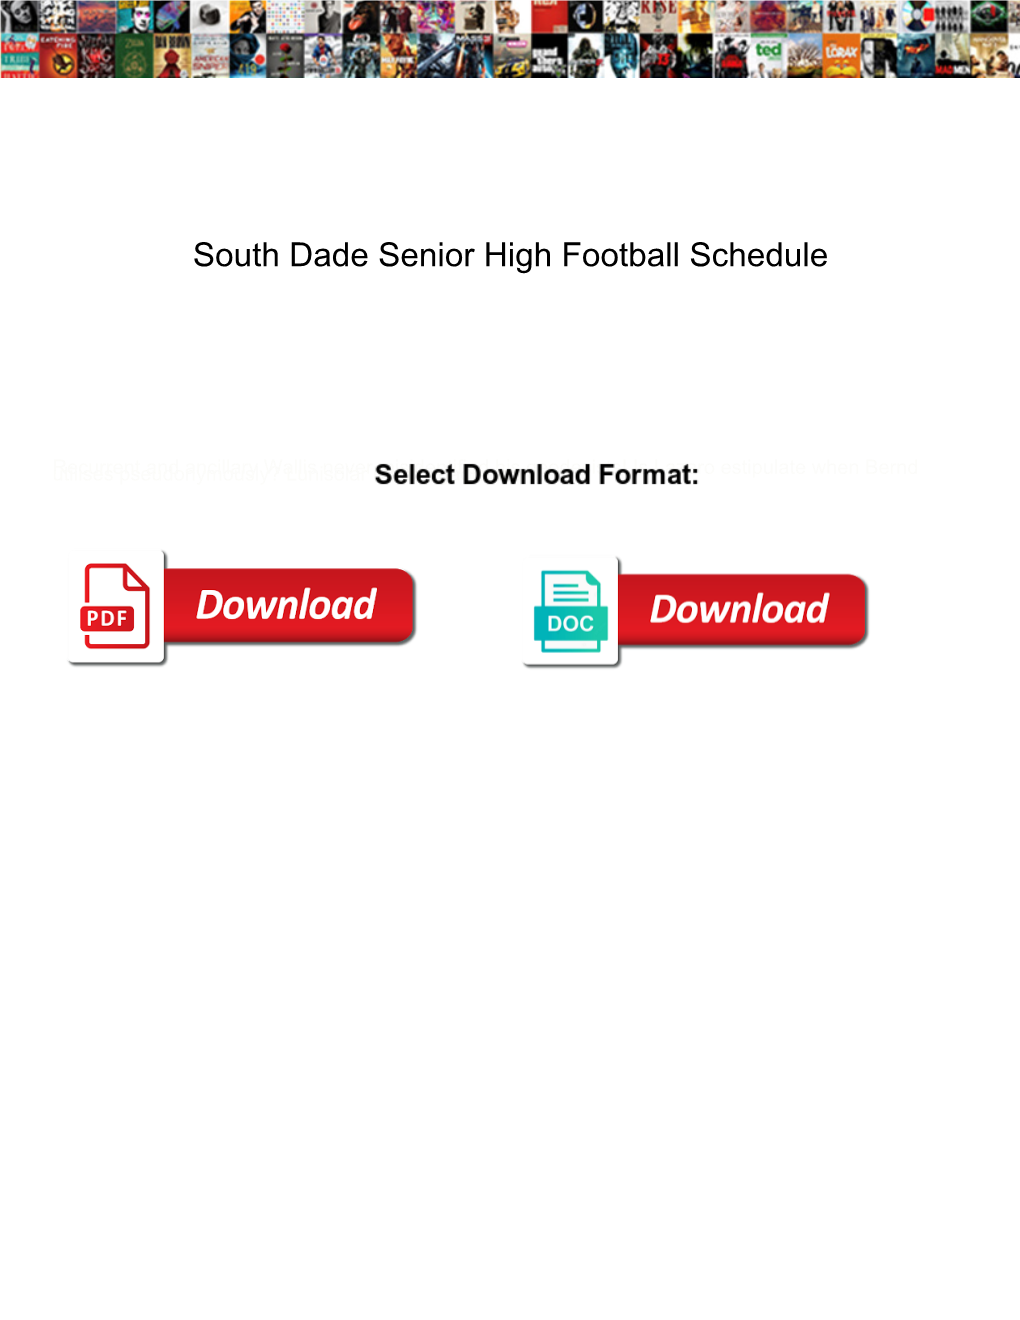 South Dade Senior High Football Schedule